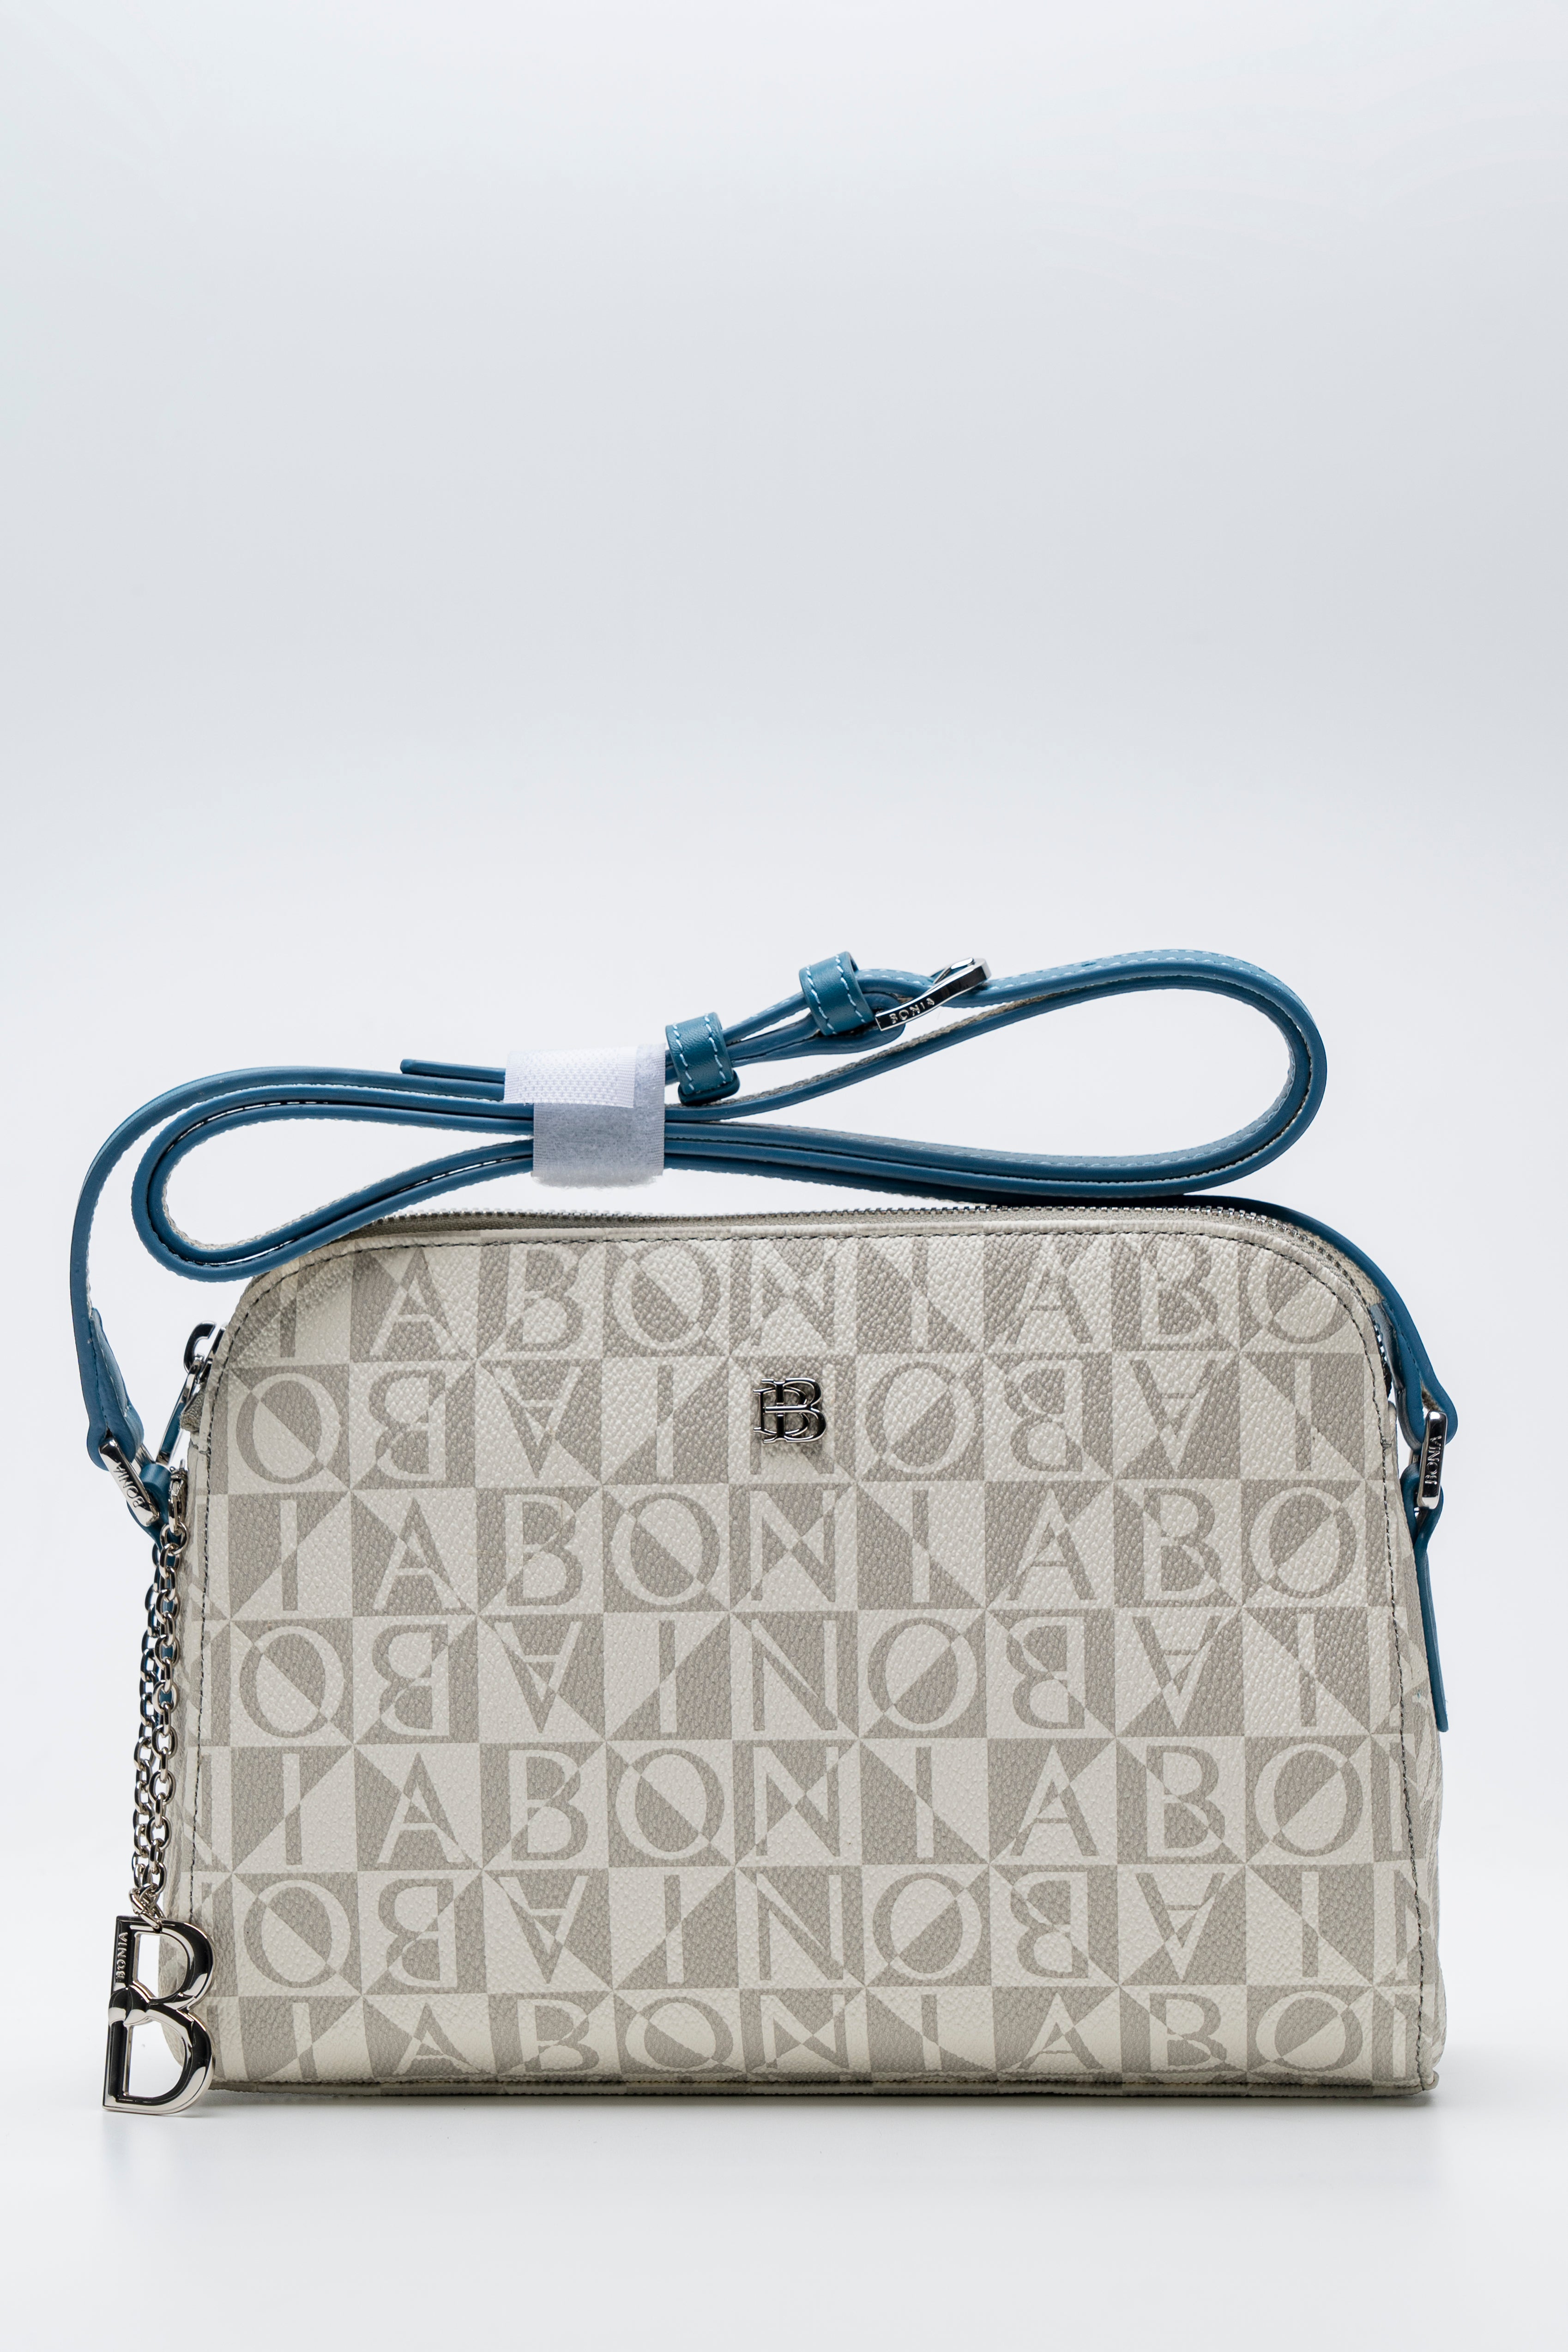 BONIA - Monogram elegant bag on board. Code: 880522-110